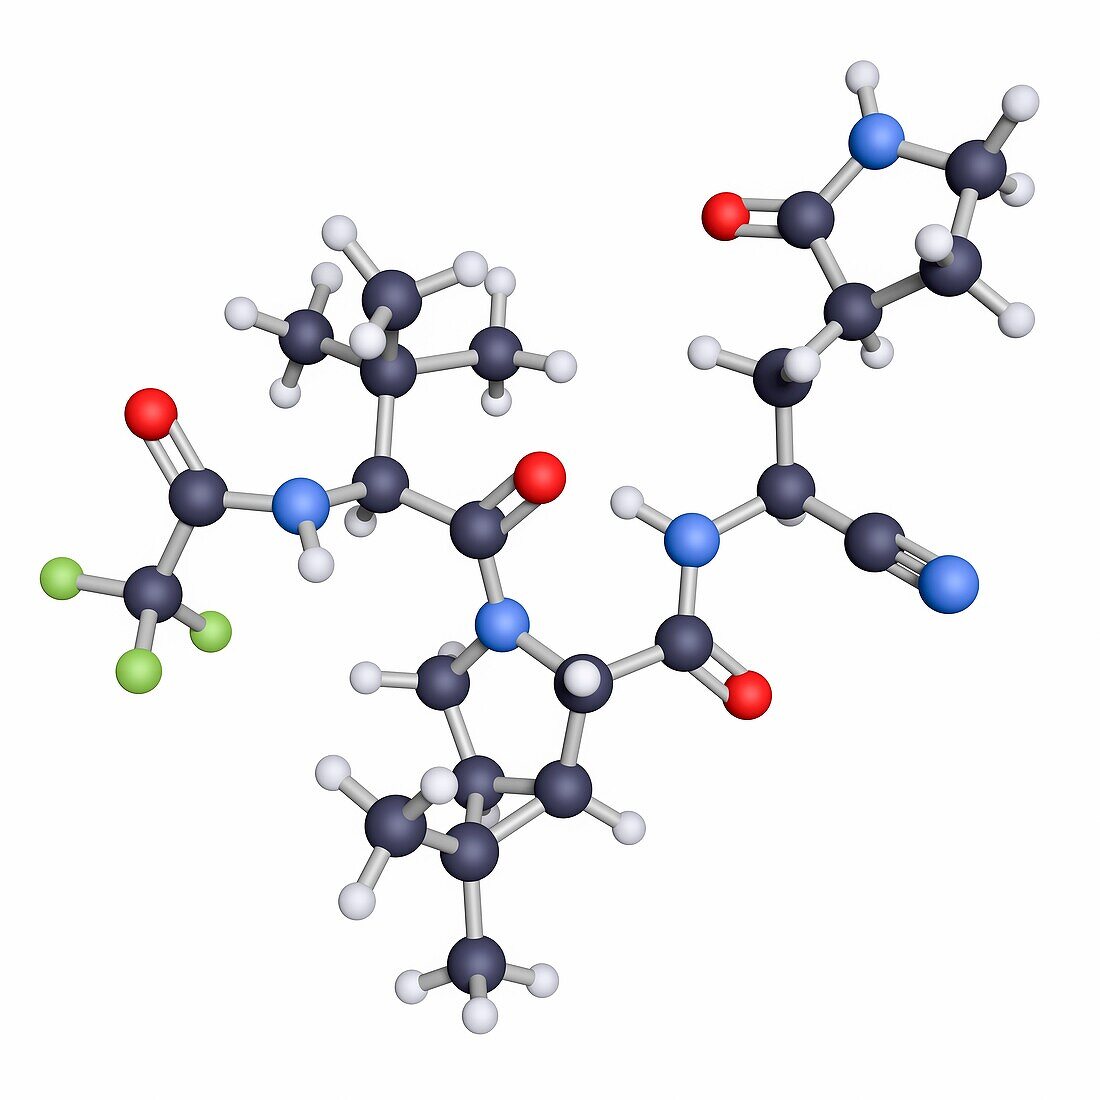 Nirmatrelvir drug for Covid-19, molecular model